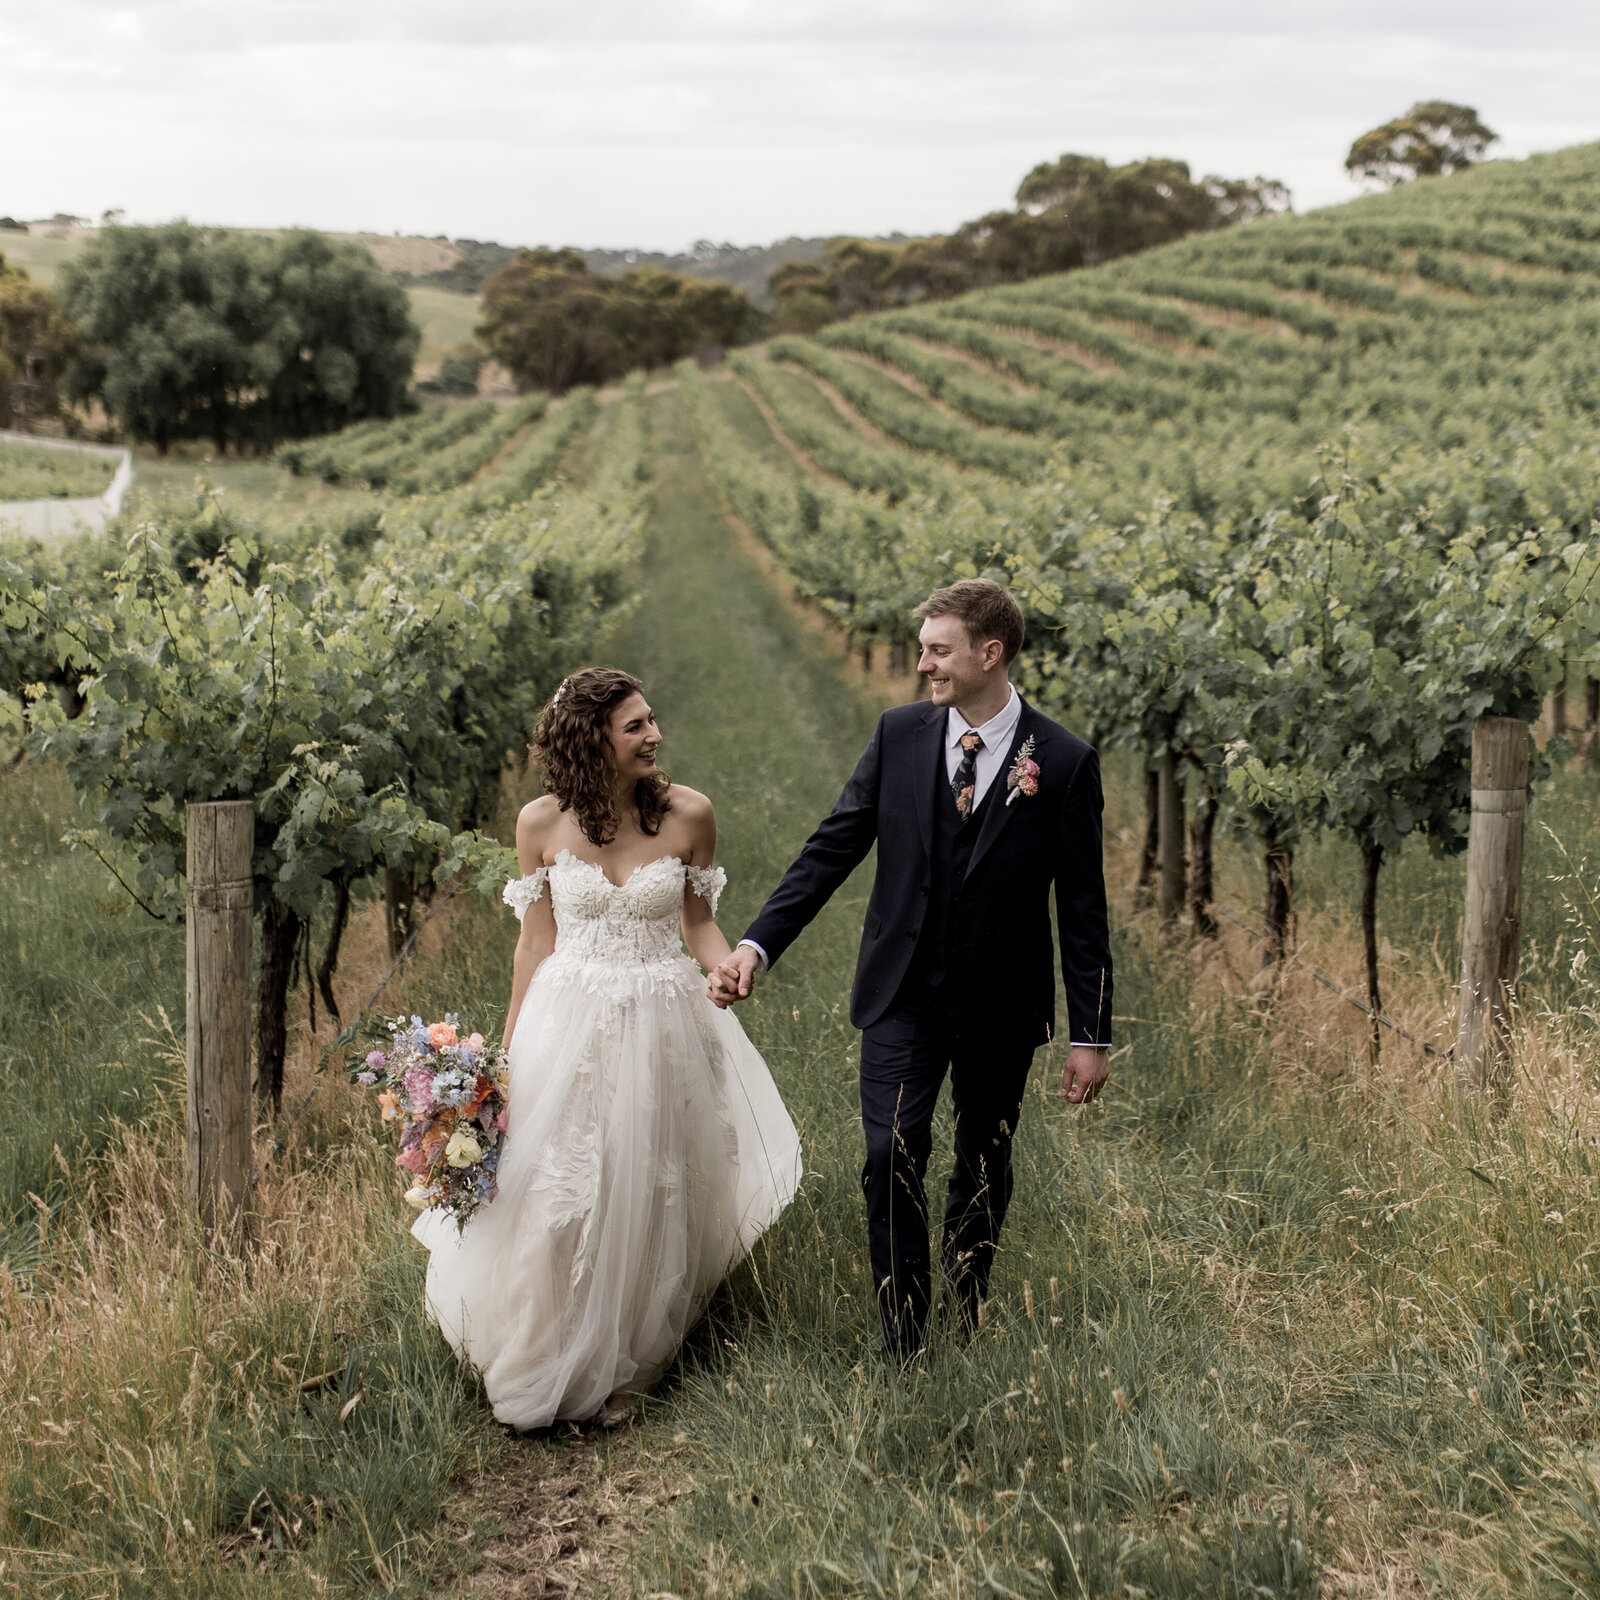 Emily-Ben-Rexvil-Photography-Adelaide-Wedding-Photographer-437